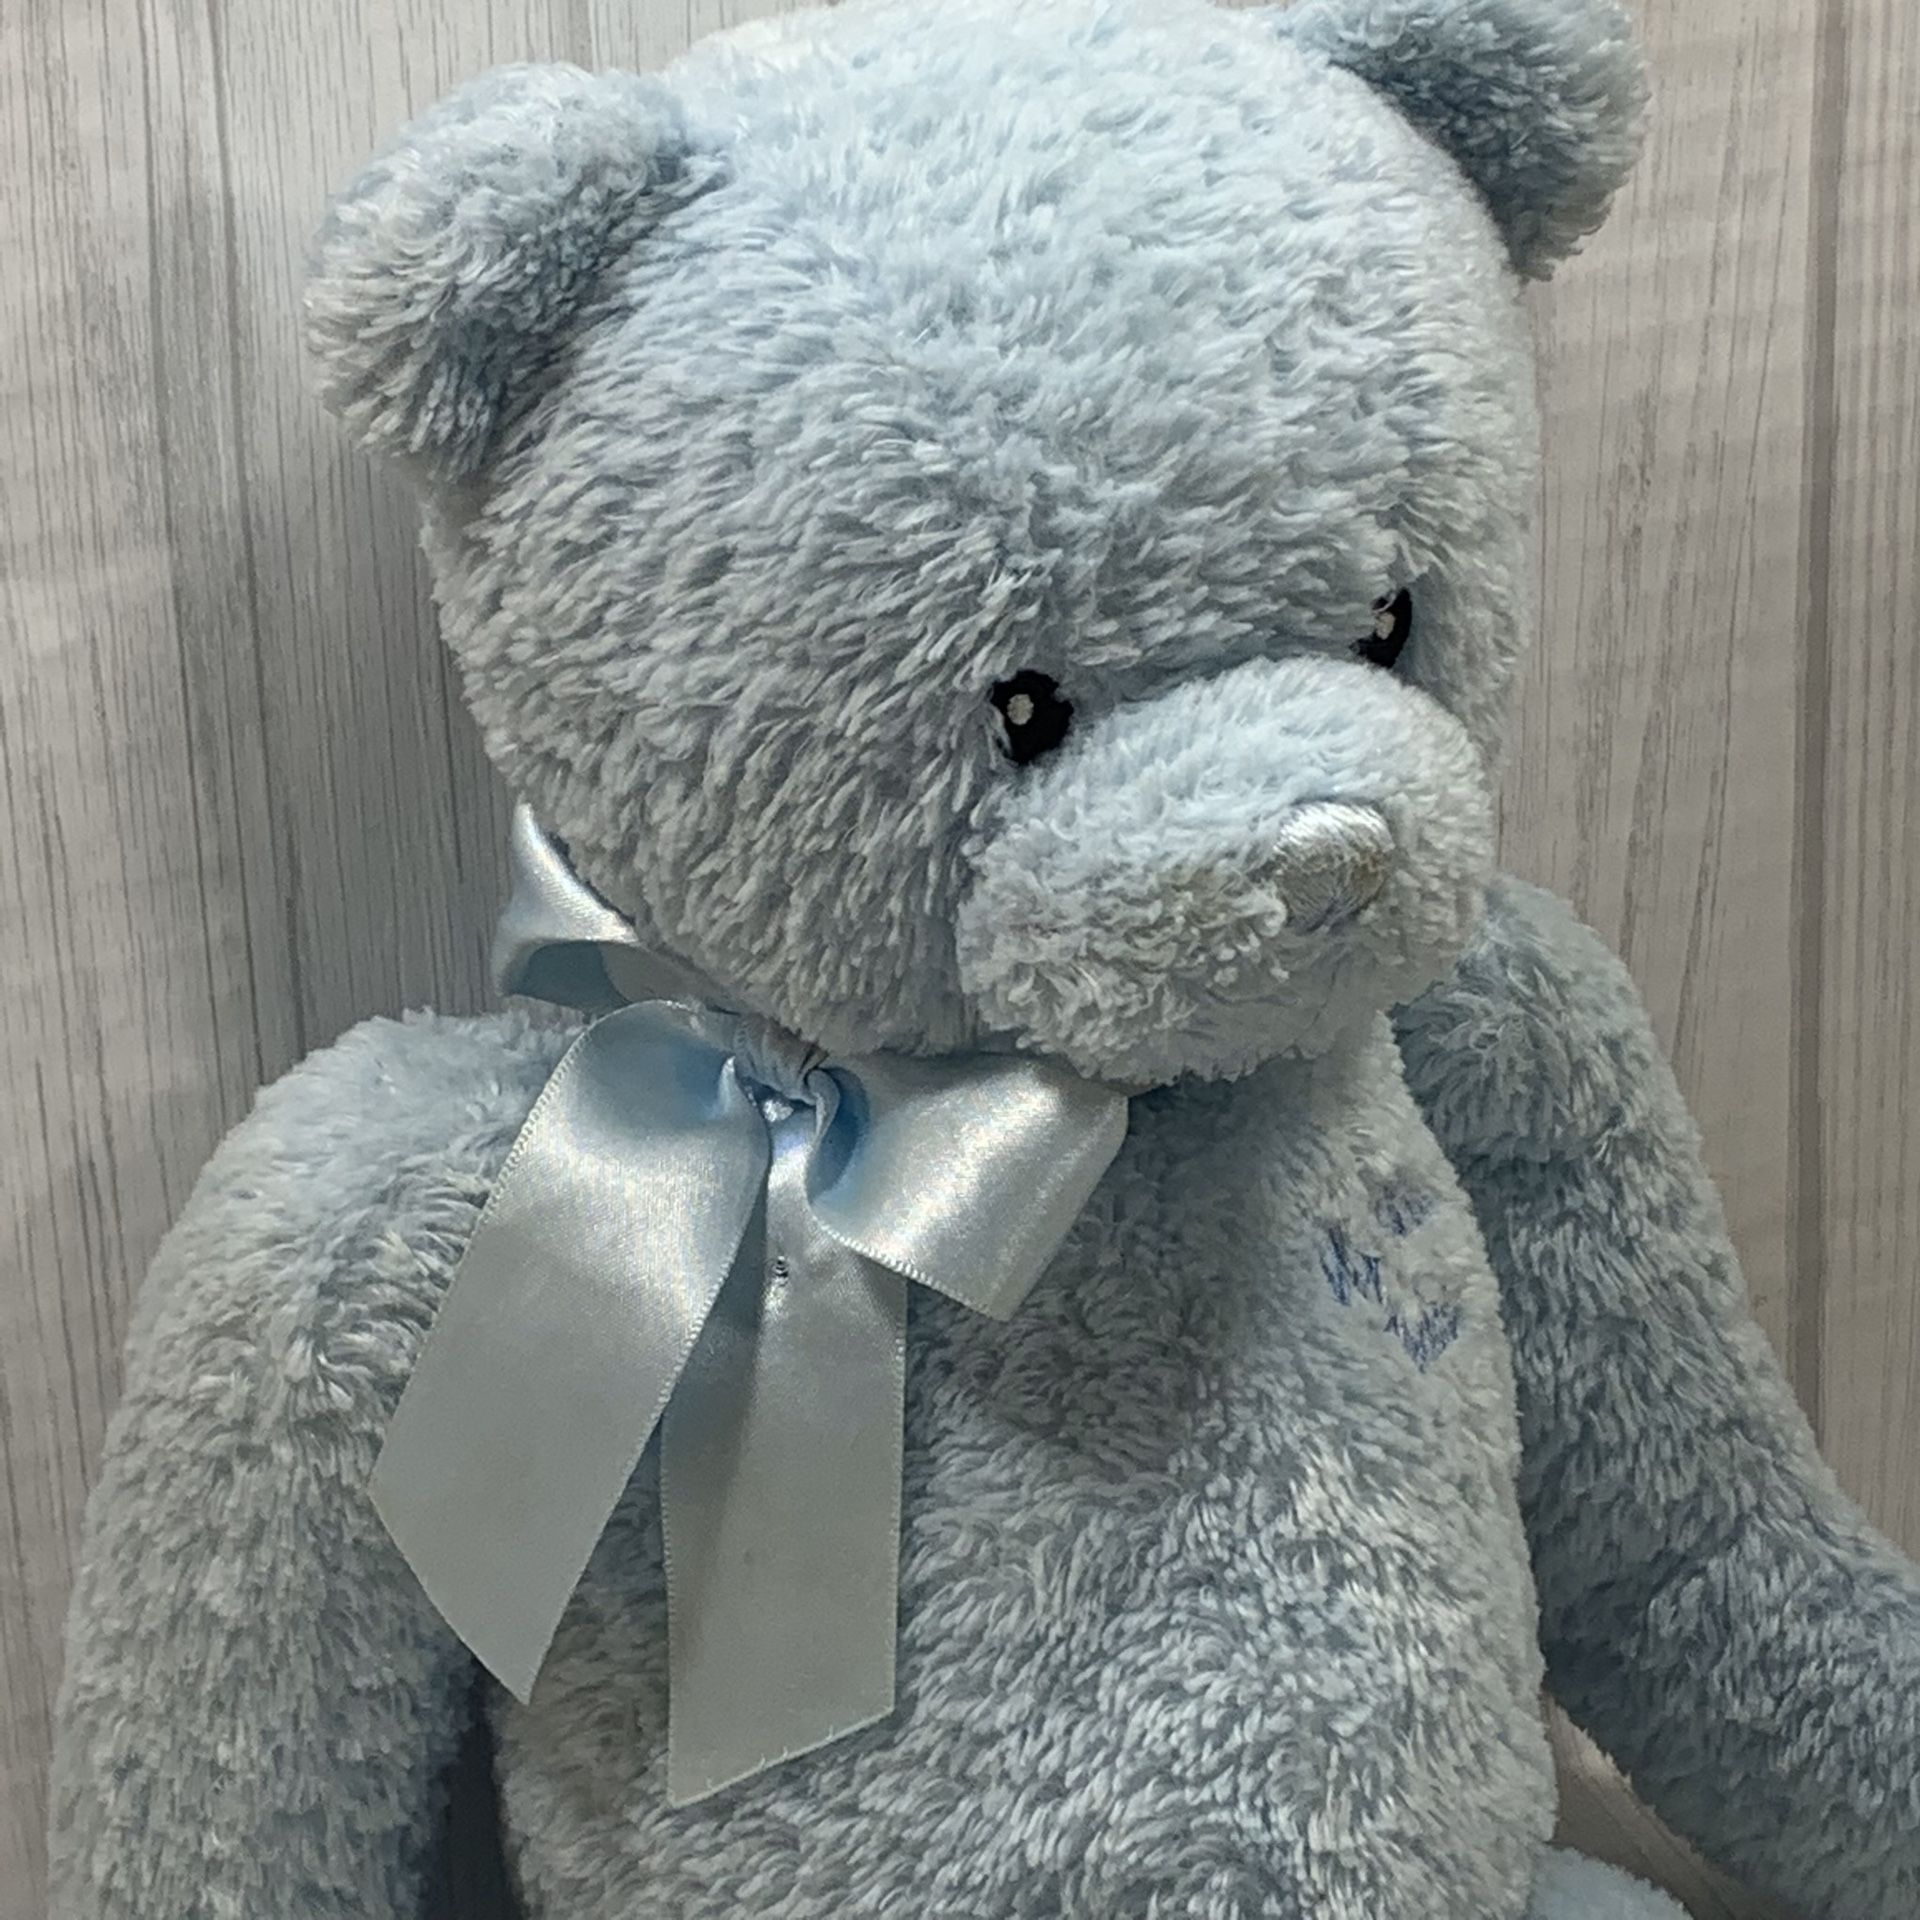 Baby Gund Plush Baby’s First Teddy Bear Stuffed Animal Lovie